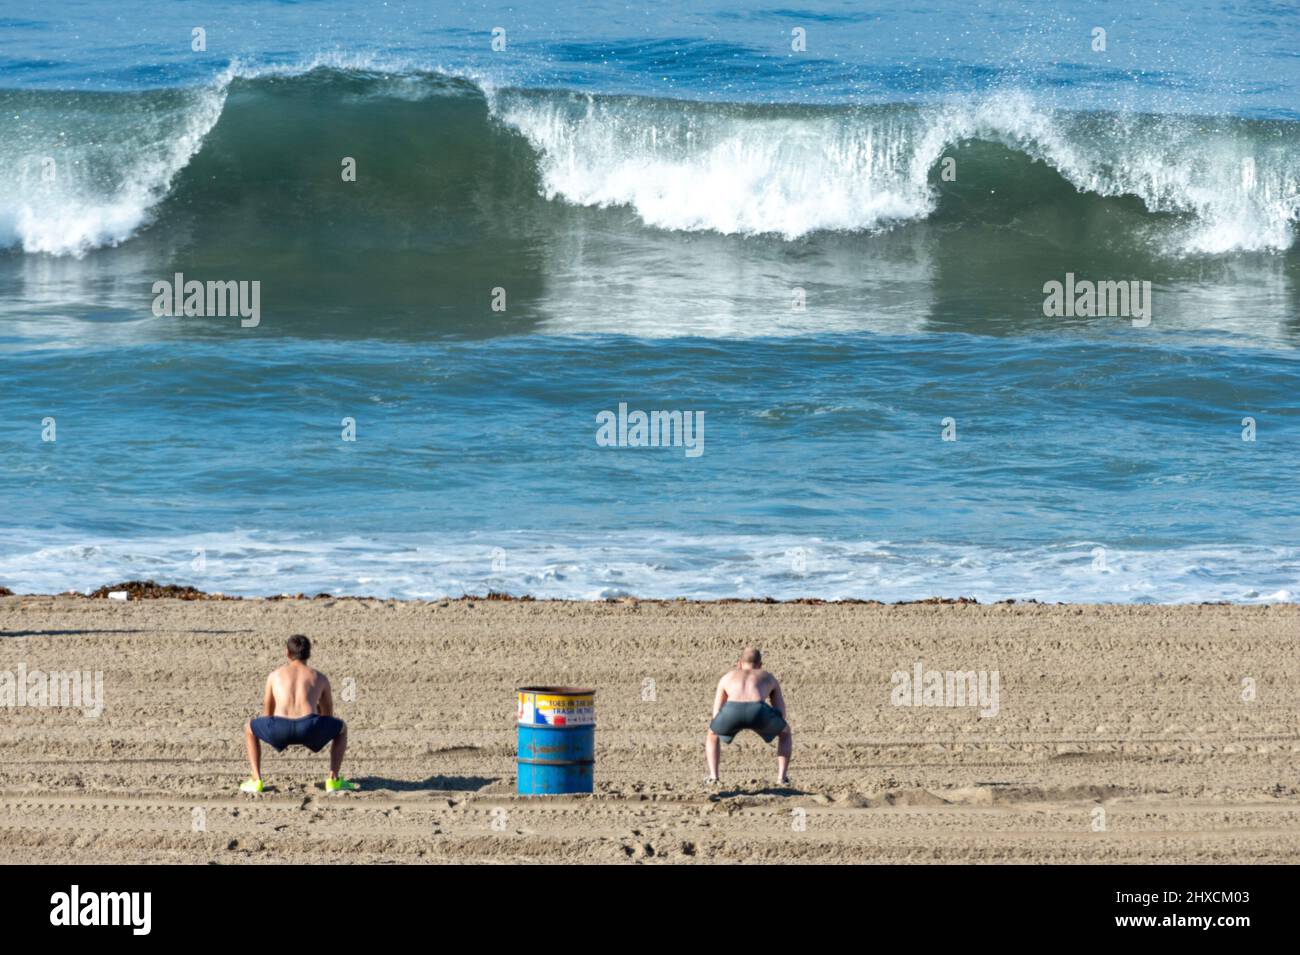 2 athletes doing gymnastics in front of big waves, Santa Monica, California, Stock Photo